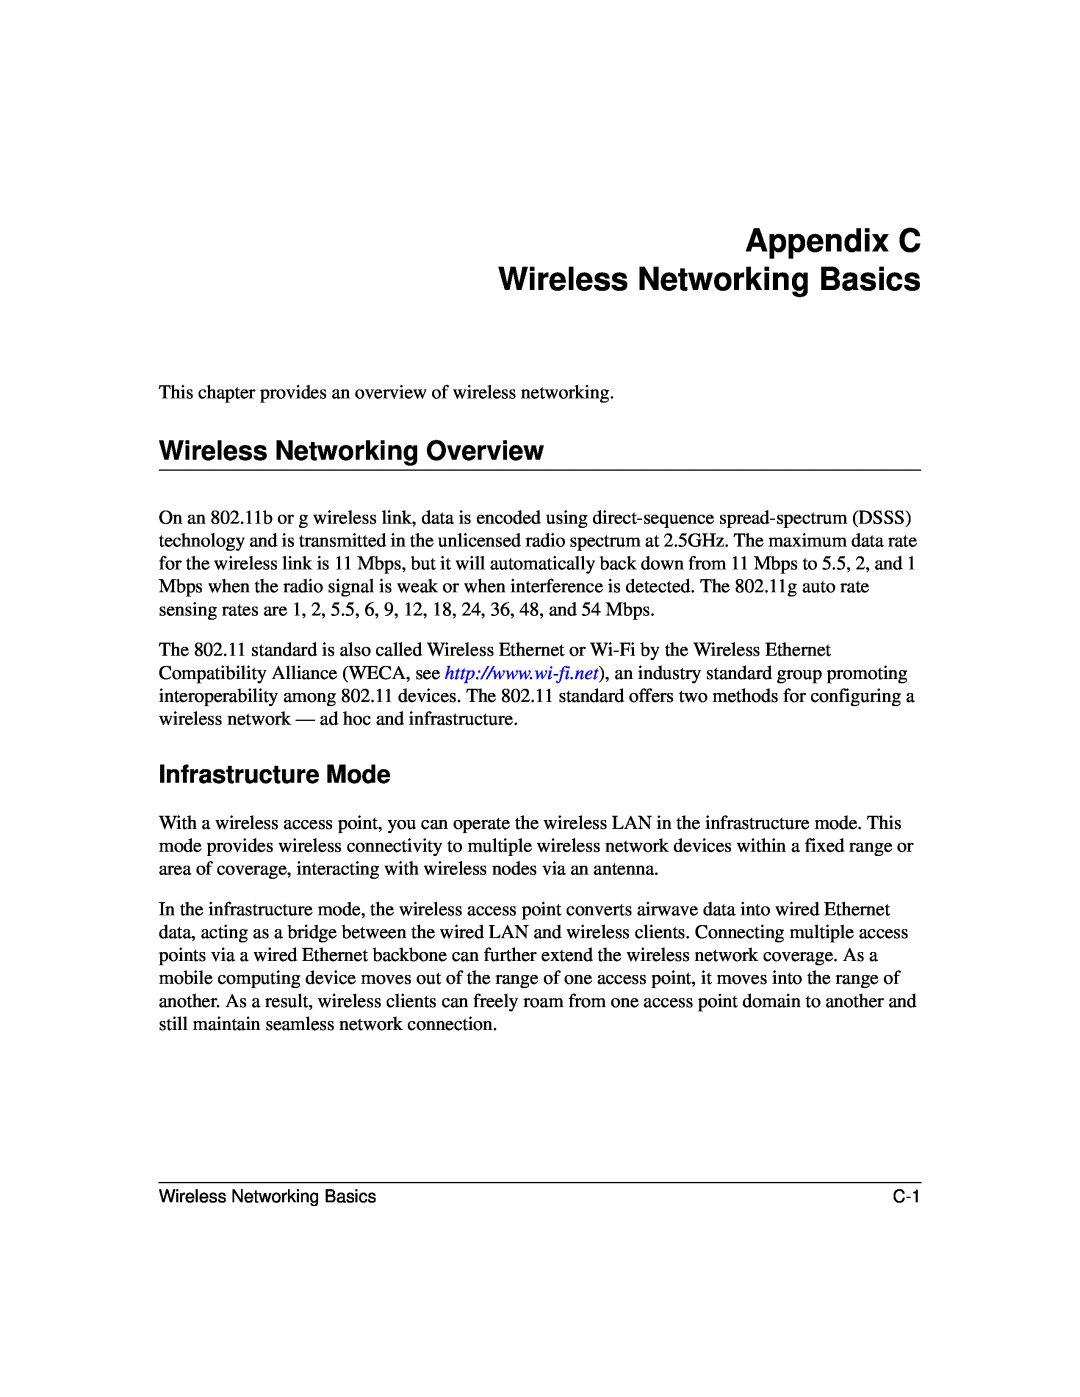 NETGEAR WGE111 user manual Appendix C Wireless Networking Basics, Wireless Networking Overview, Infrastructure Mode 